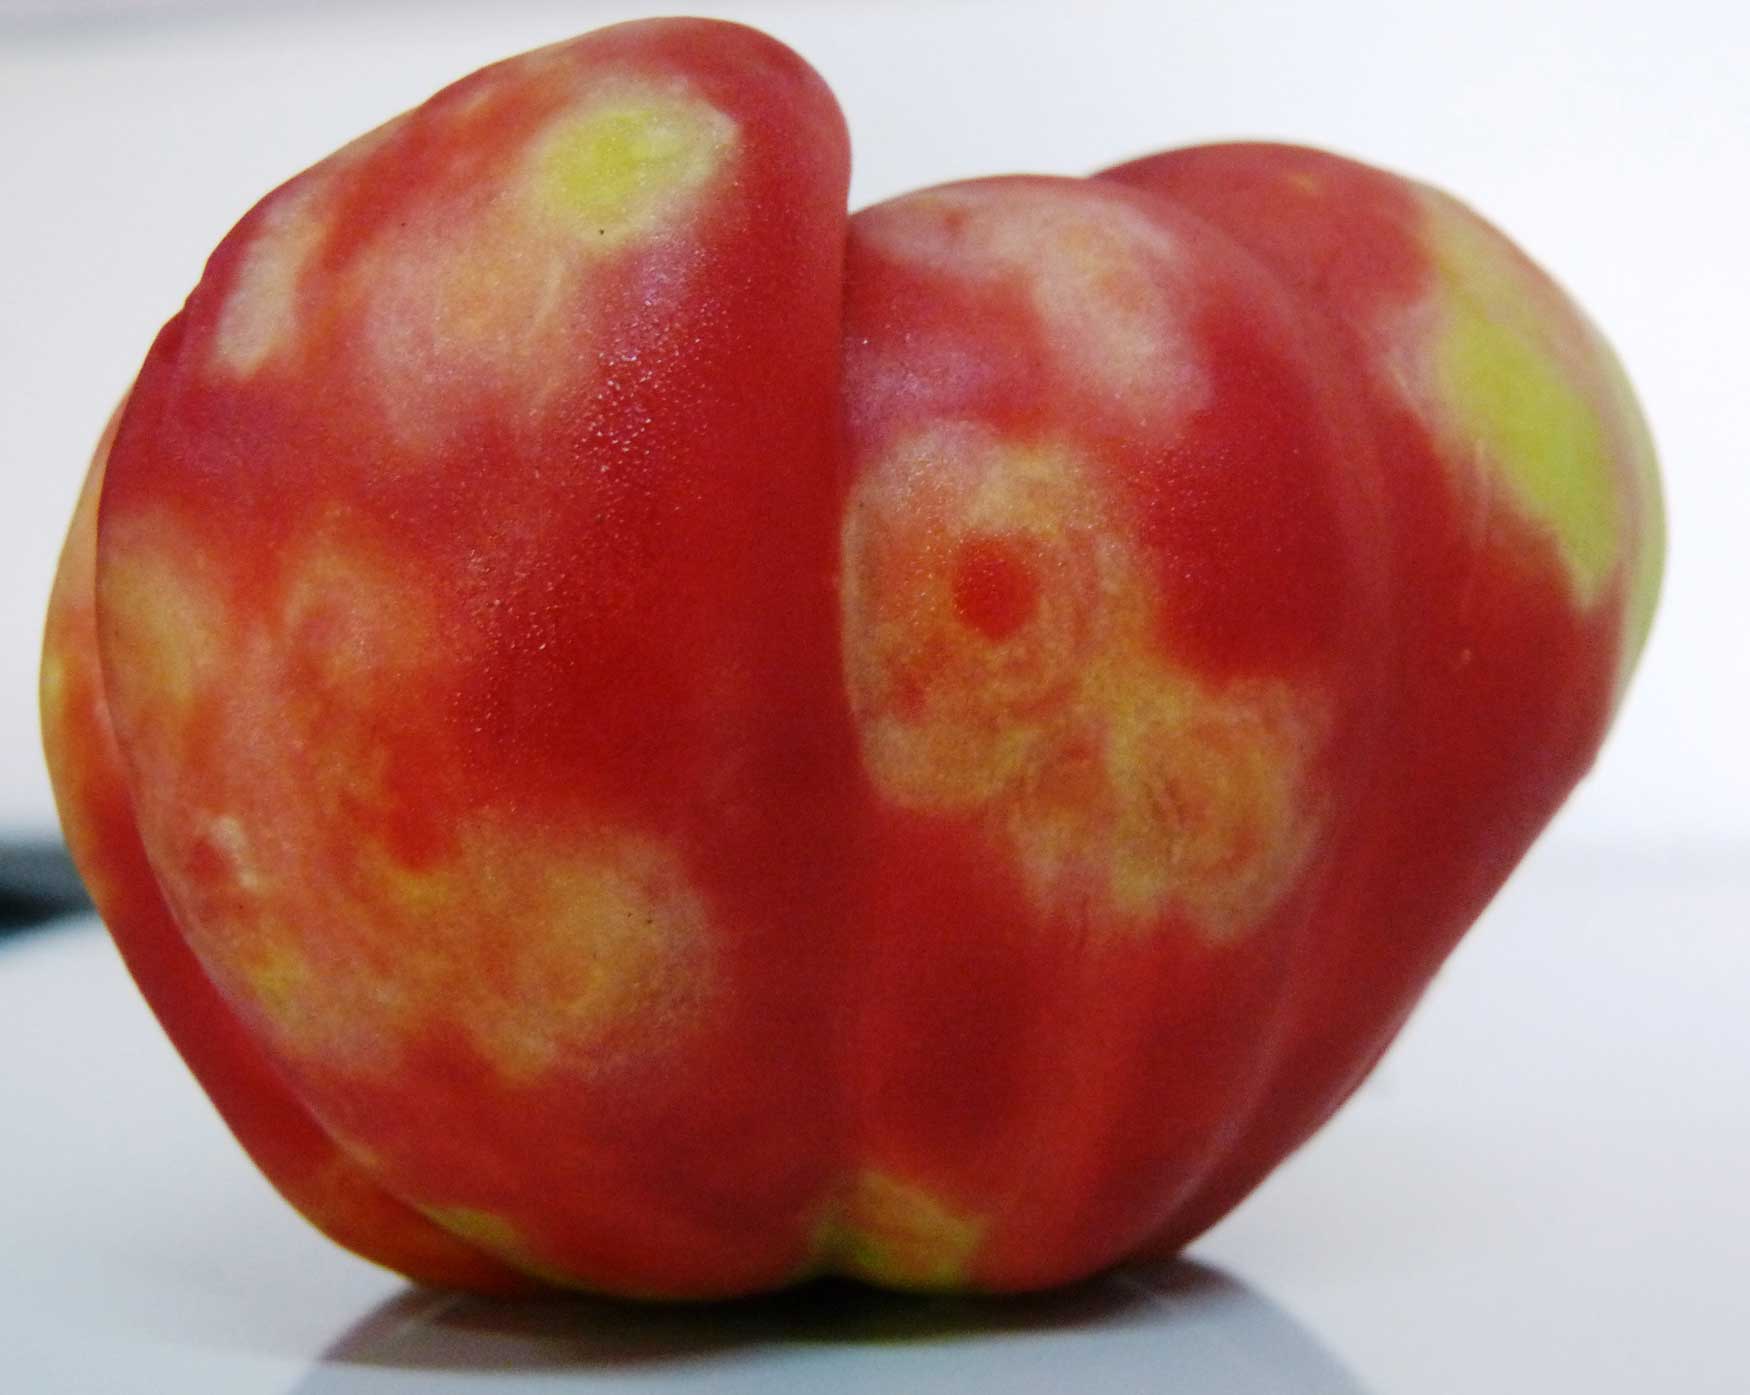 Tomato spotted wilt virus (TSWV) en el fruto